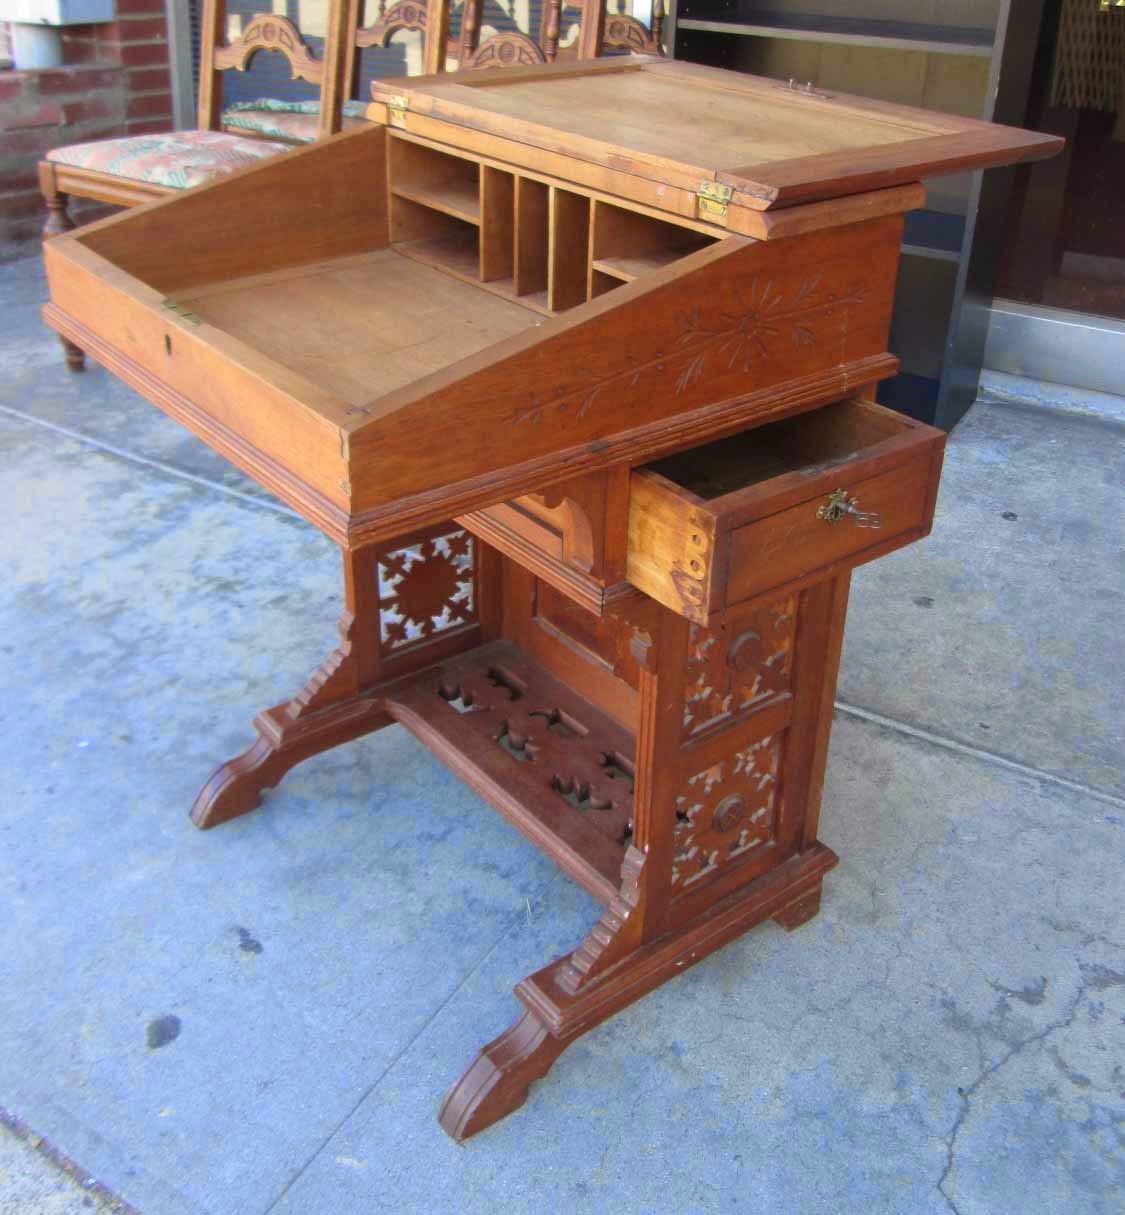 UHURU FURNITURE & COLLECTIBLES: SOLD Antique Hand Carved Student Desk - $200